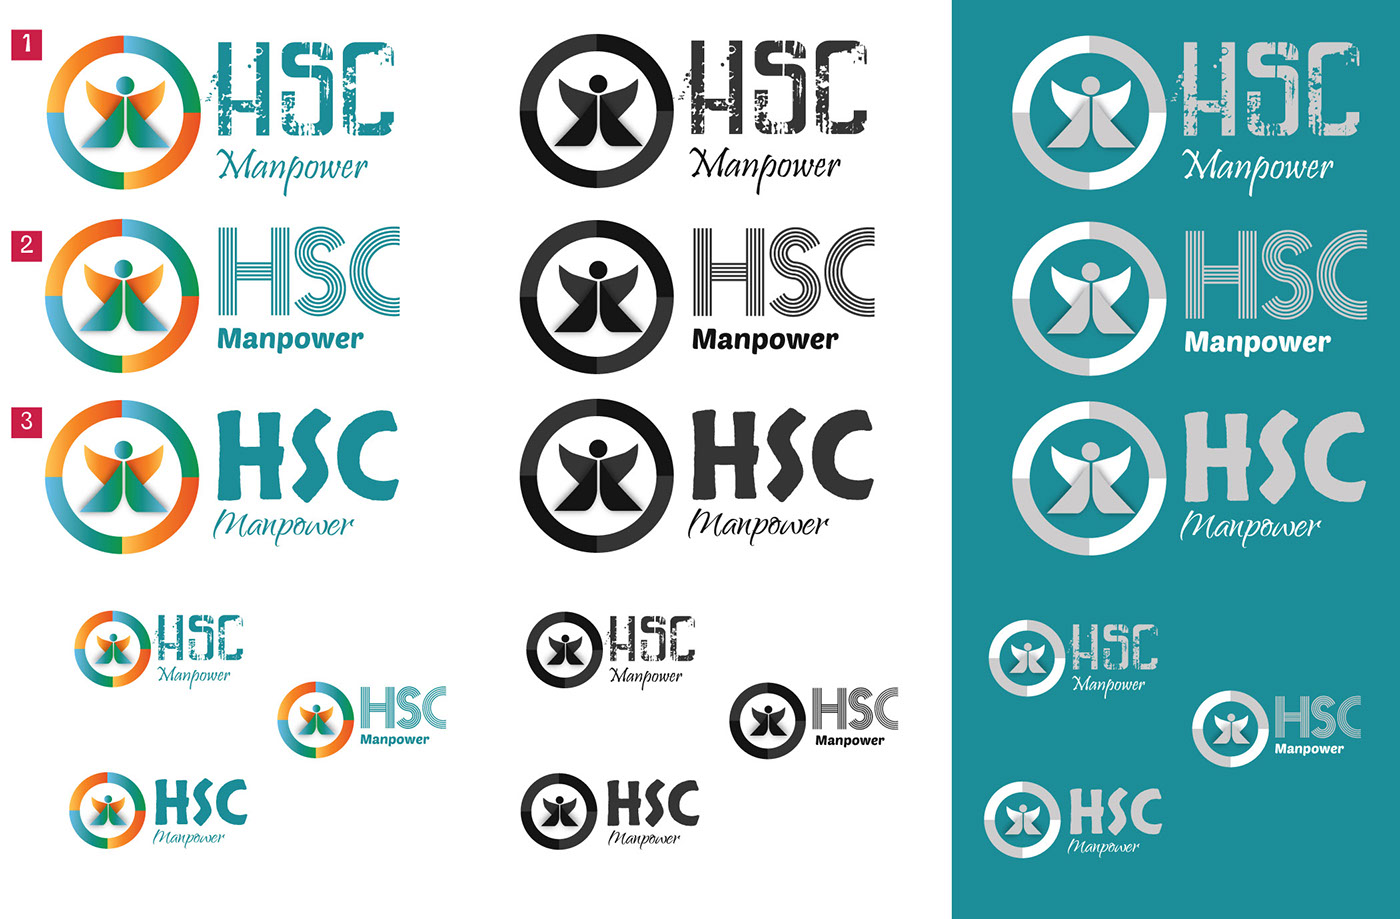 HSCMANPOWER logo graphics design